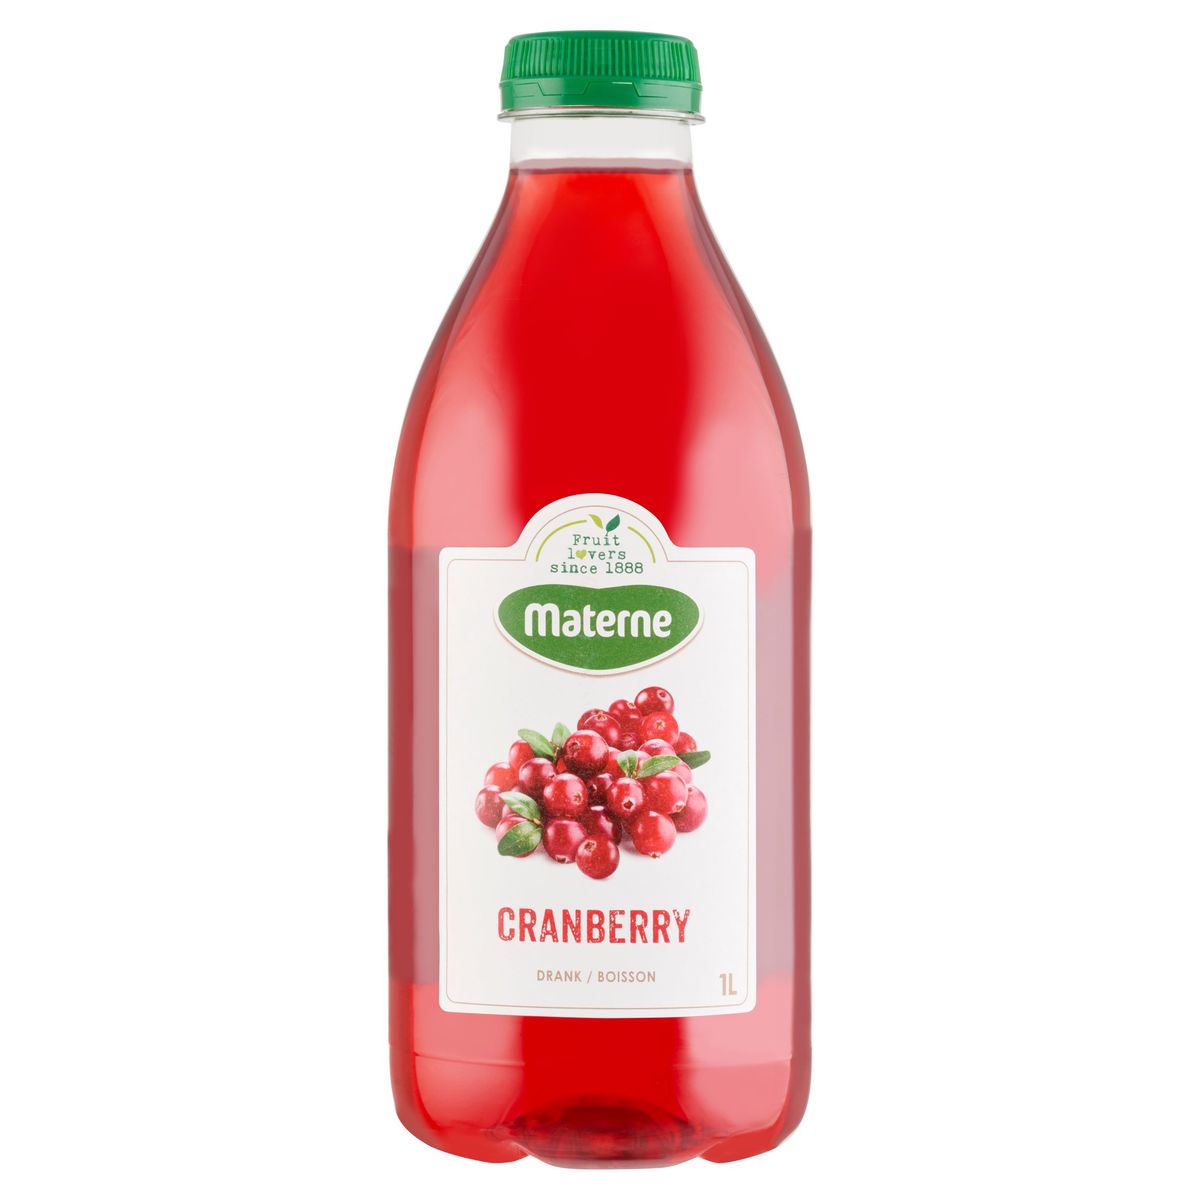 Materne Cranberry Pressé 1 L